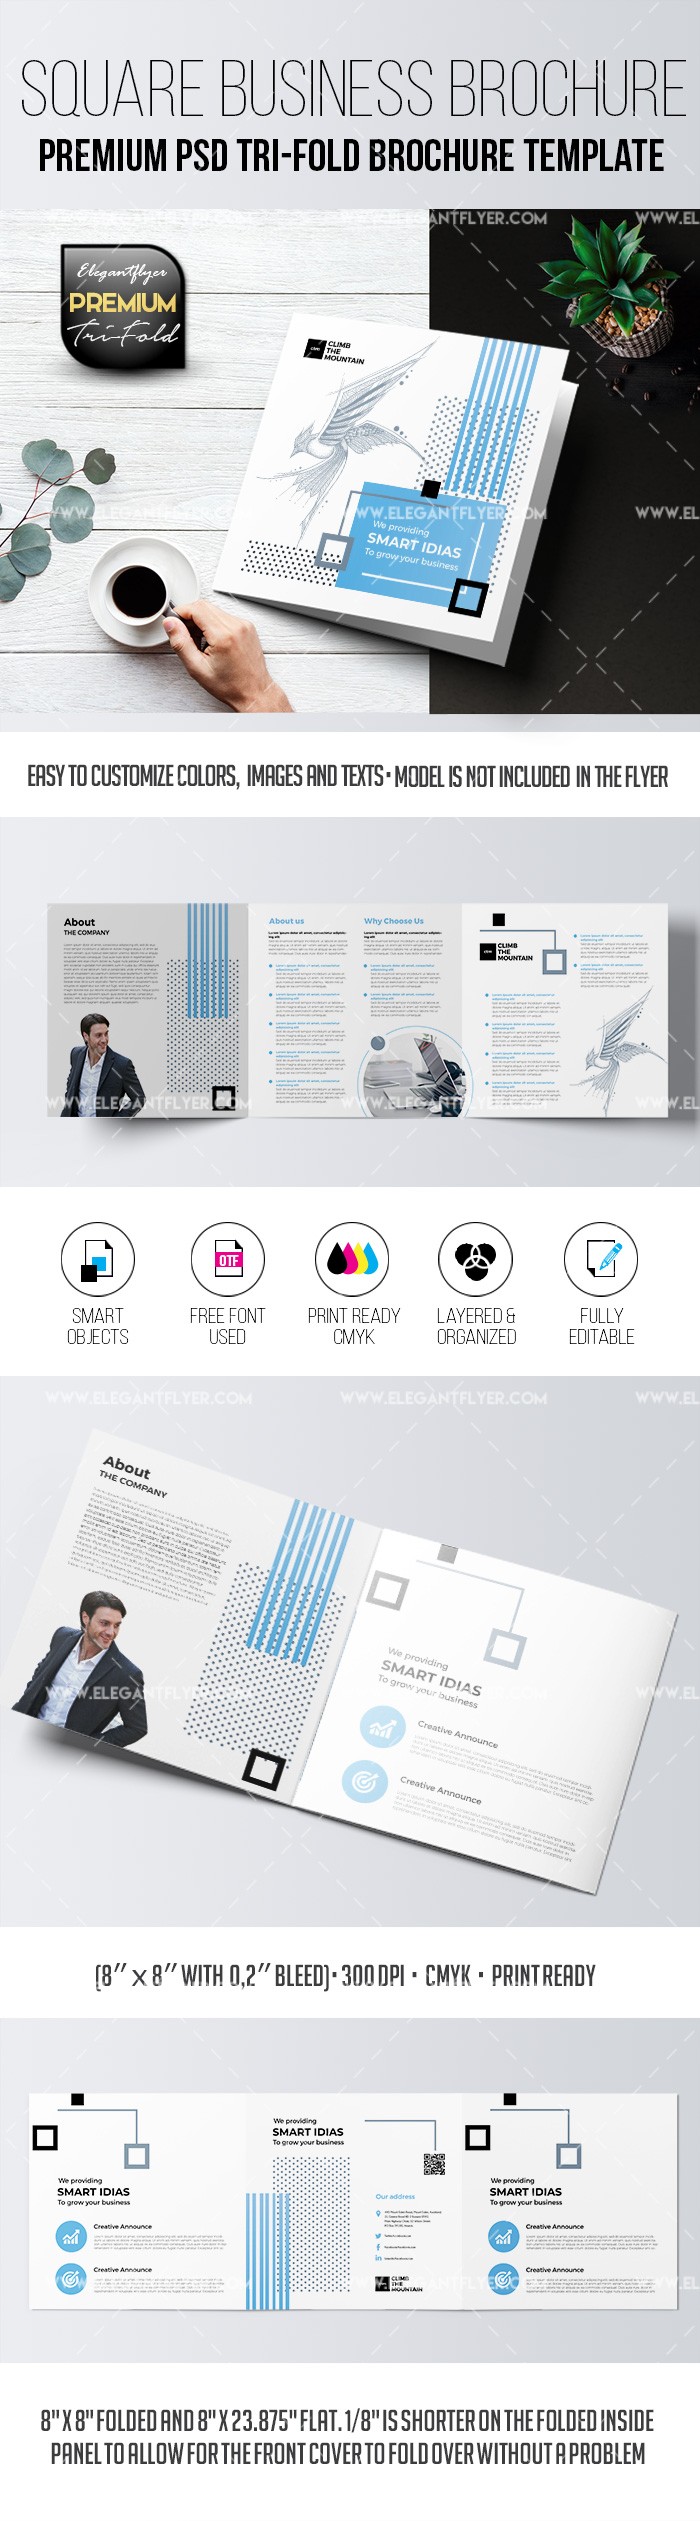 Square - Premium PSD Tri-Fold Brochure Template by ElegantFlyer